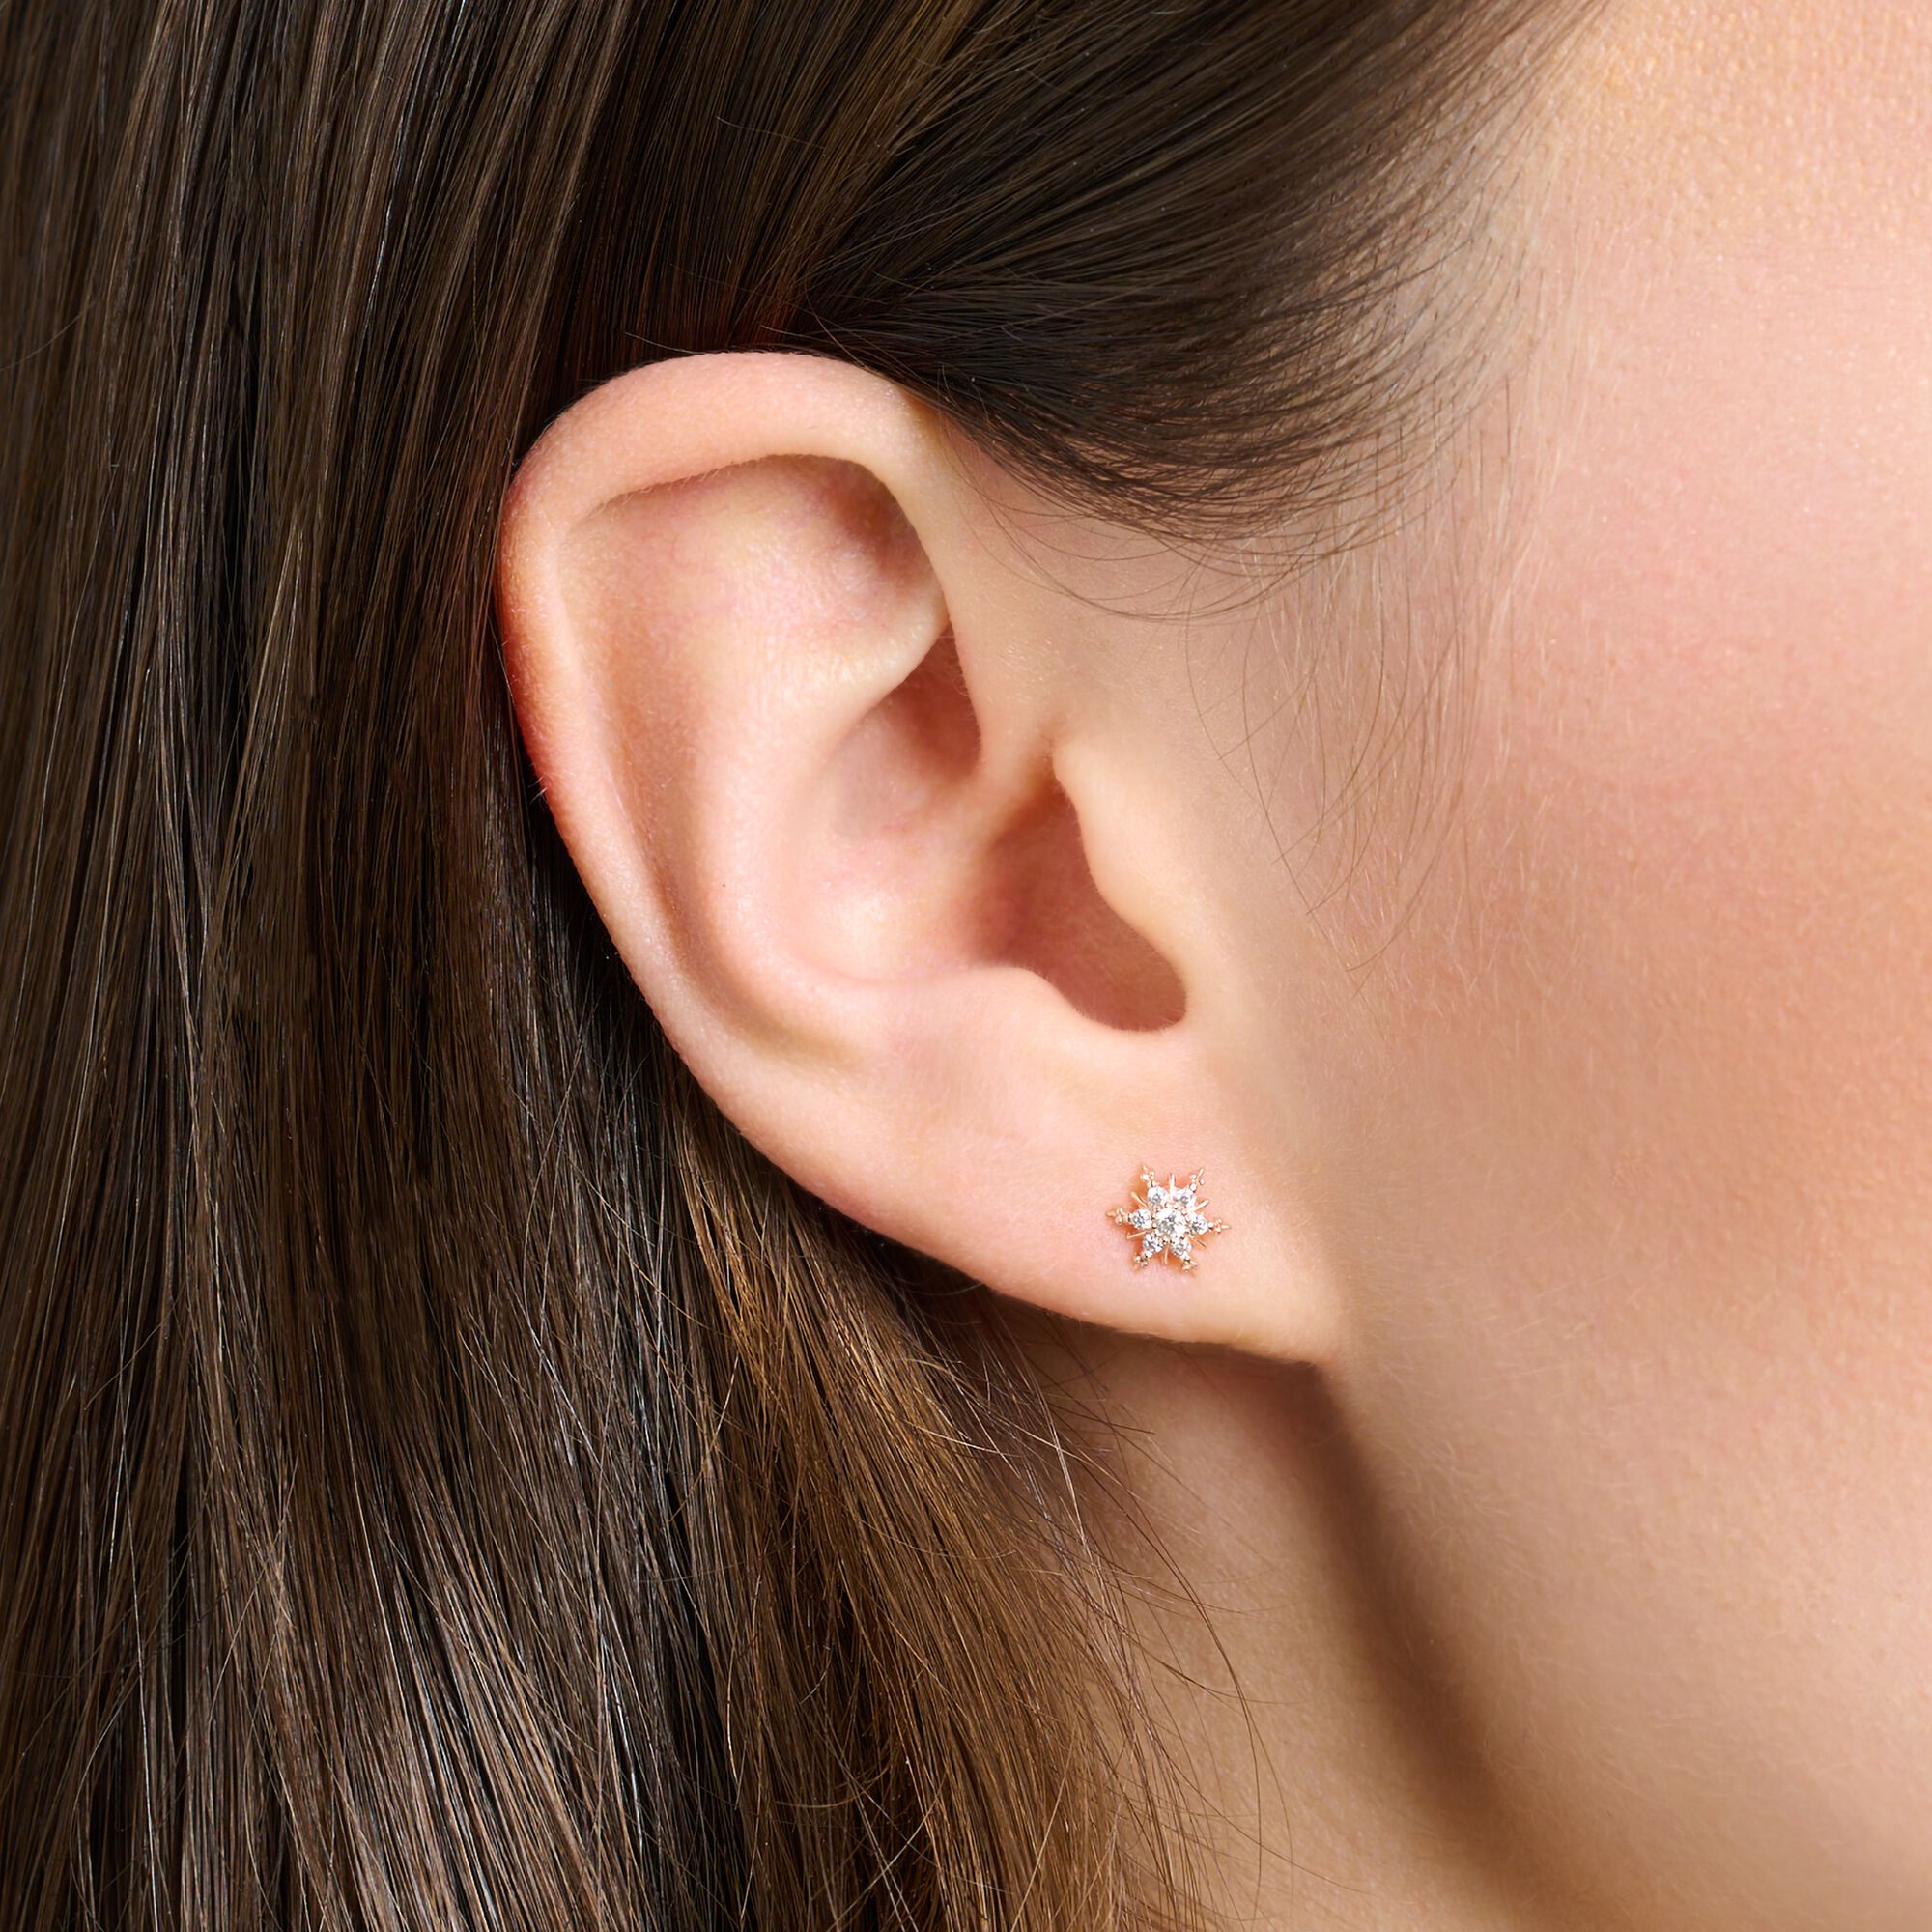 Single stud THOMAS | rosé SABO plating earring: snowflake